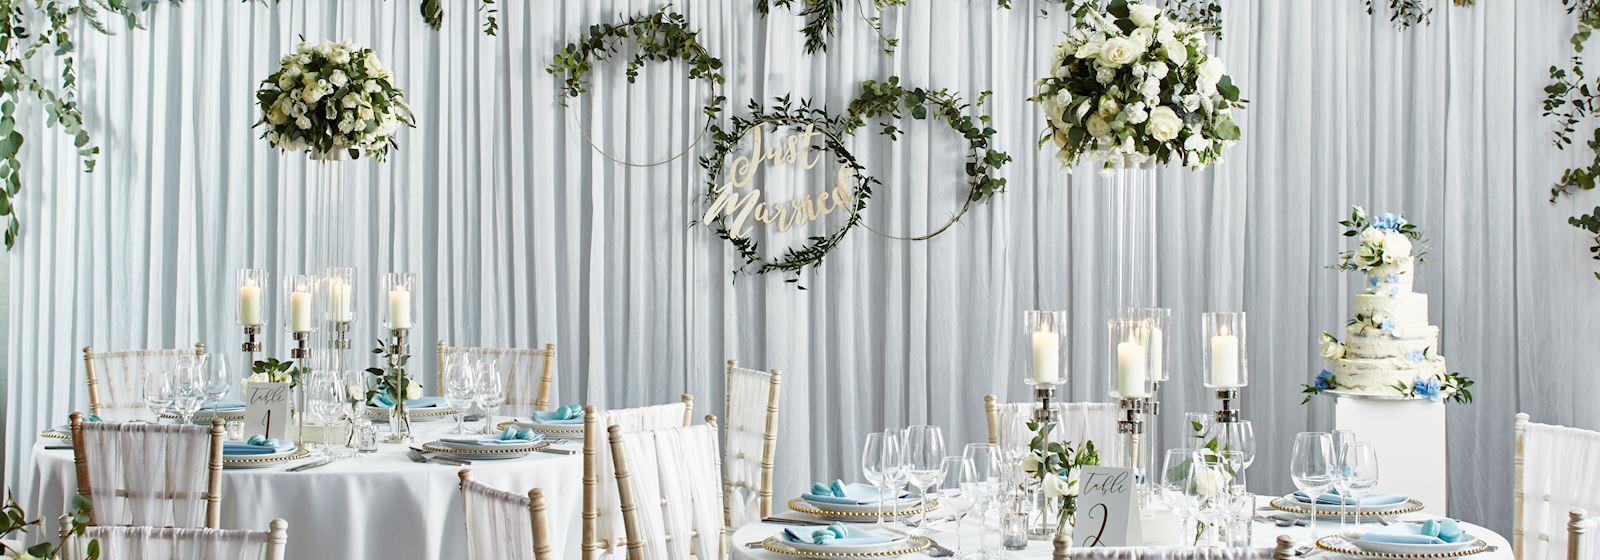 heathrow windsor marriott hotel wedding party venues